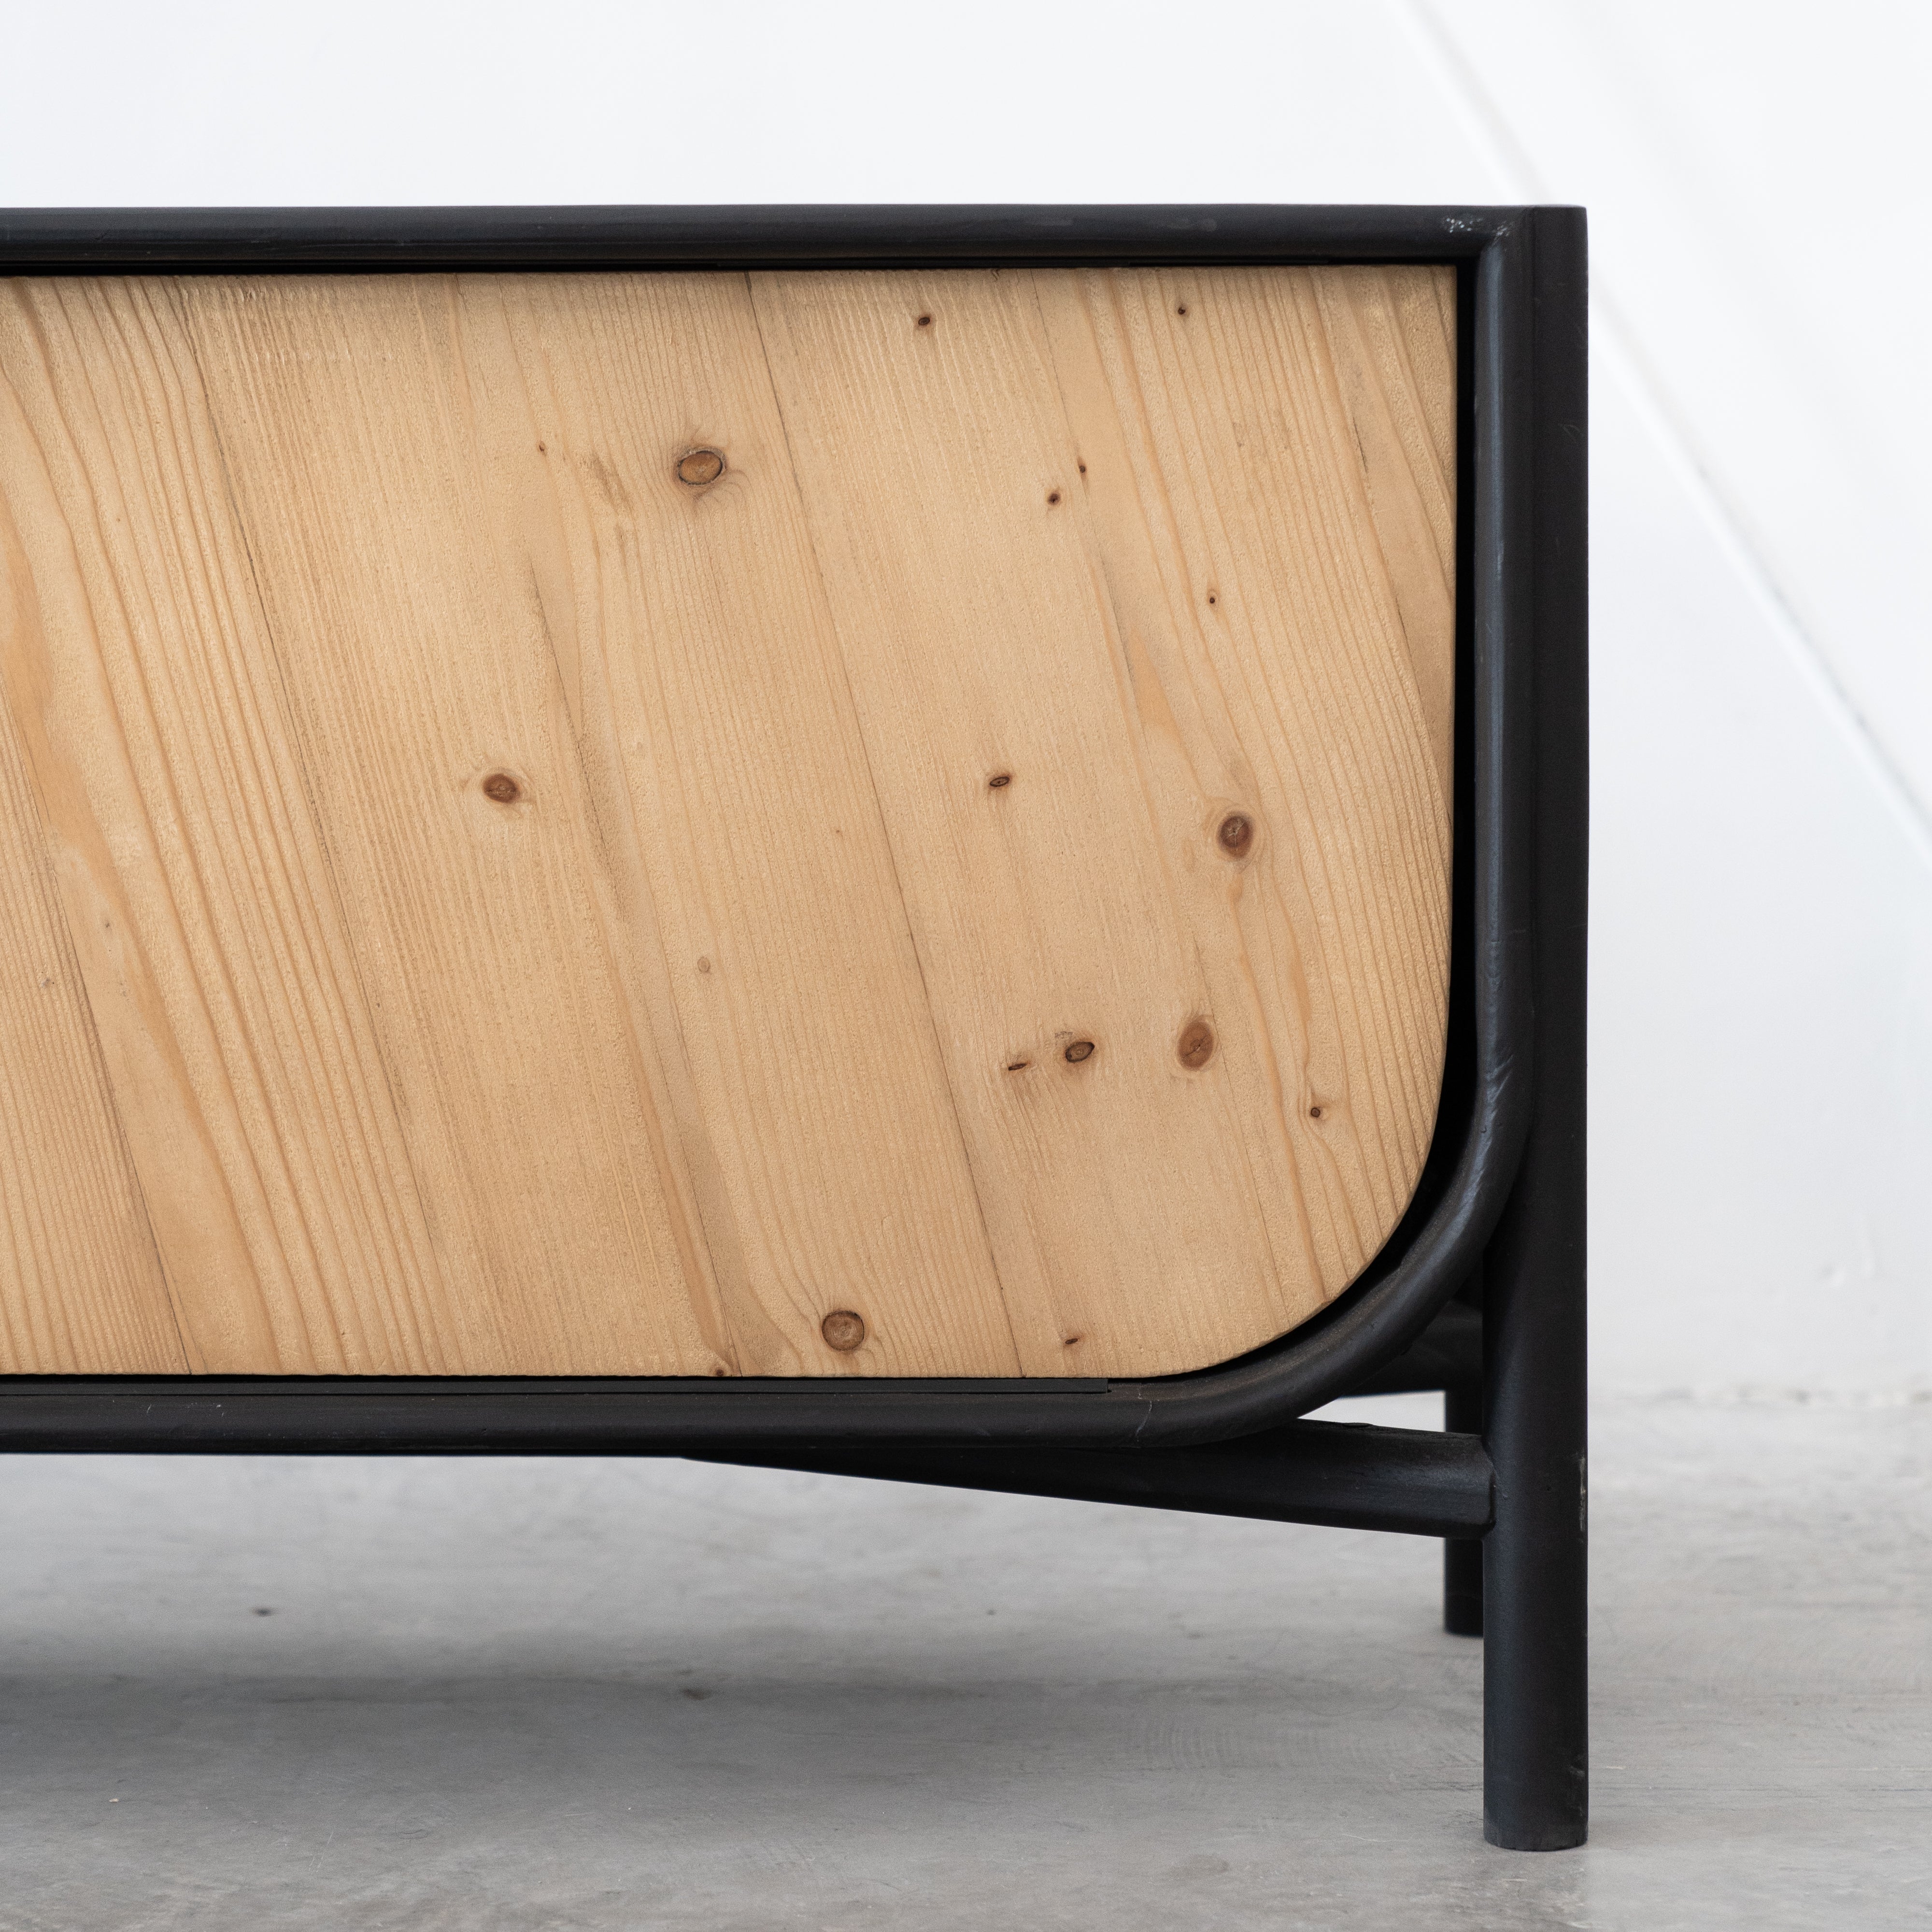 Retro Black TV Unit - Wood and Steel Furnitures